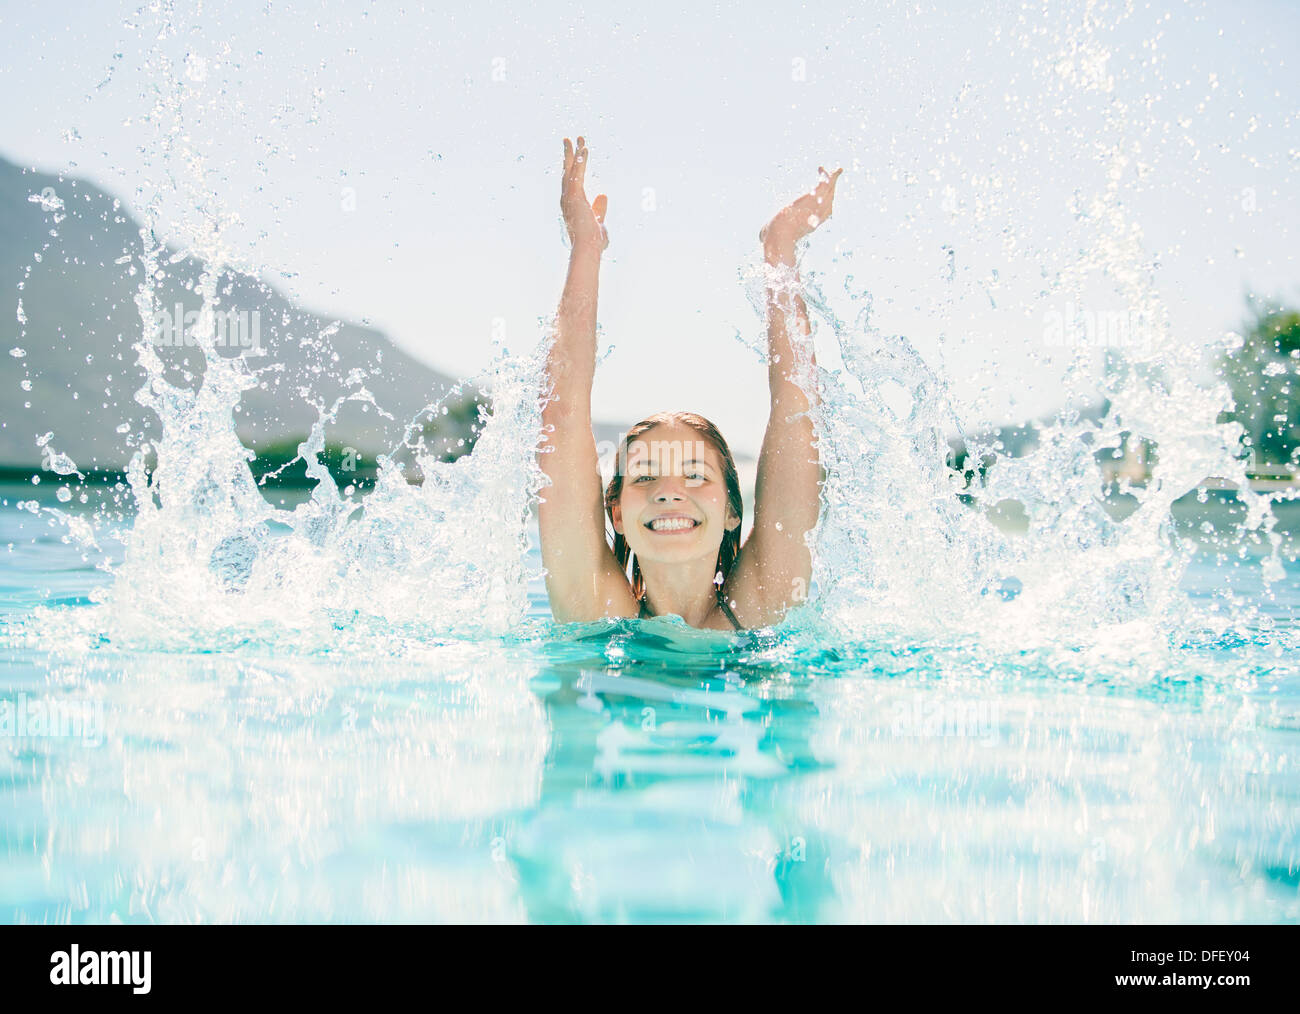 Woman splashing in swimming pool Stock Photo